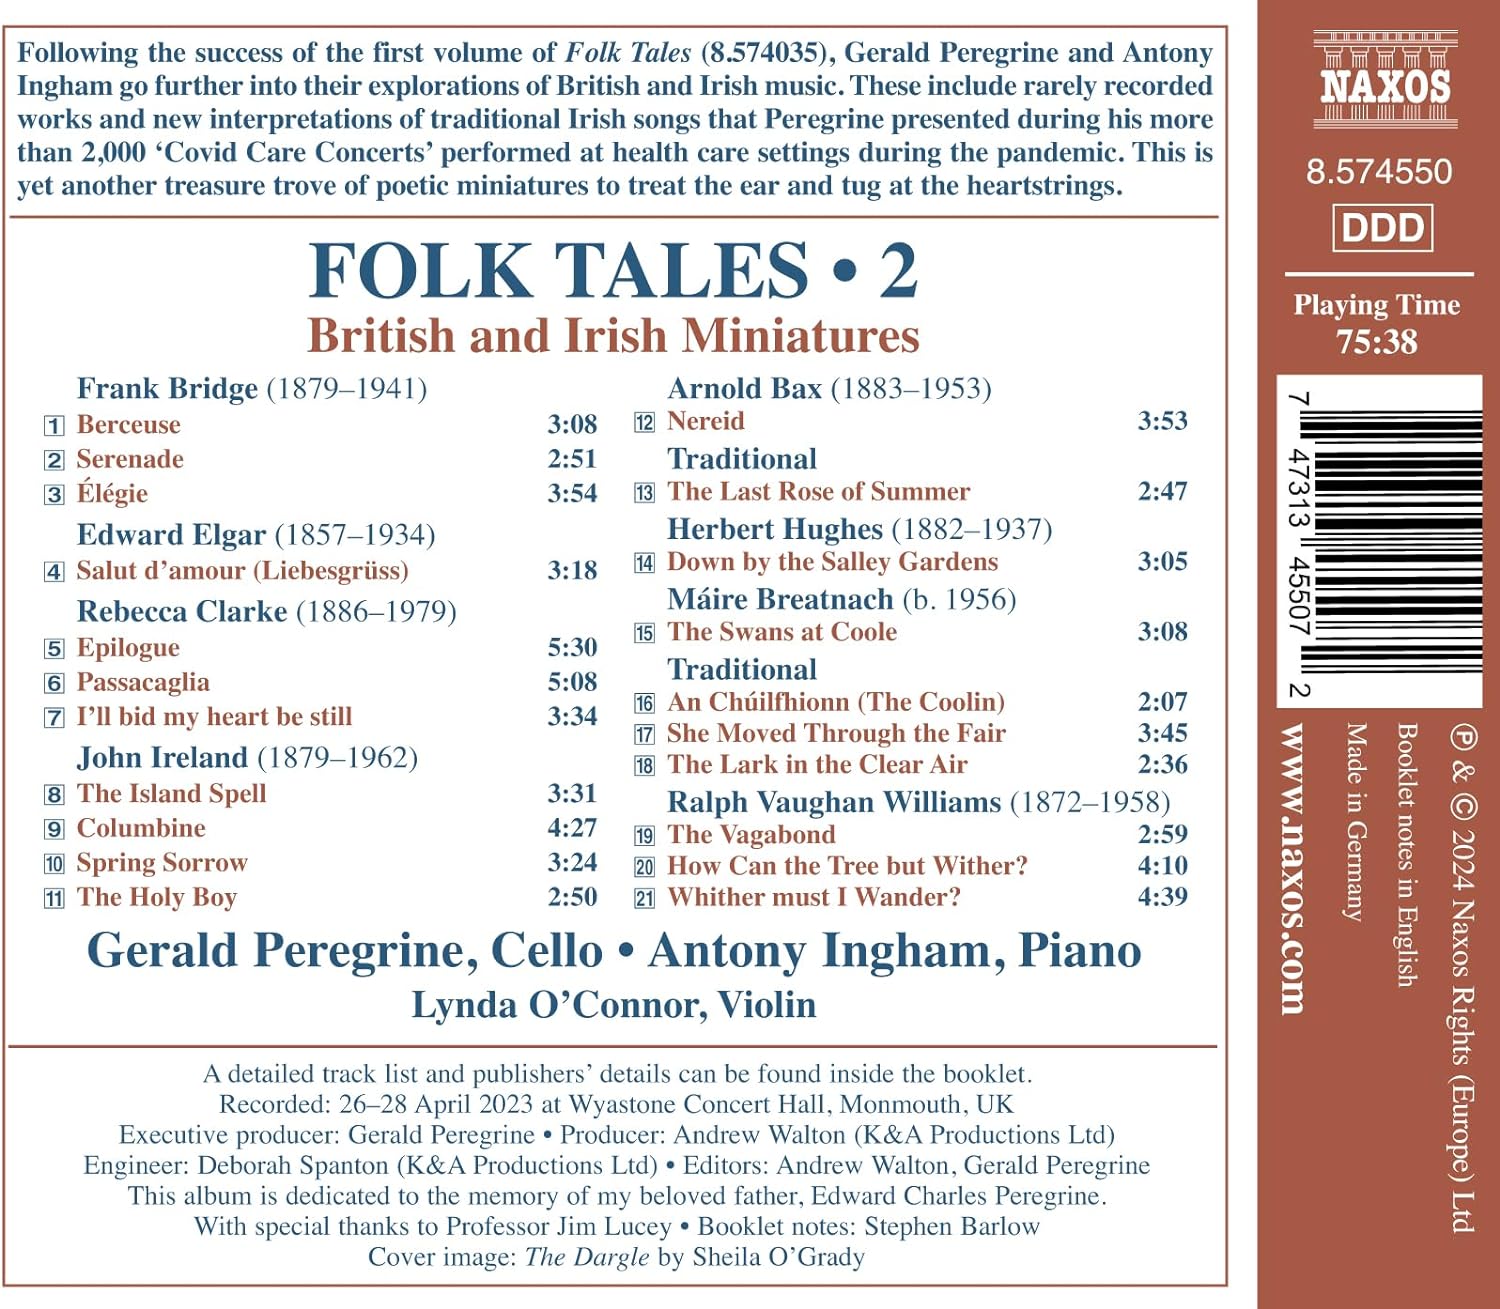 Gerald Peregrine / Antony Ingham / Lynda O'Connor 영국 작곡가들의 첼로와 피아노를 위한 소품 2집 (Folk Tales Vol.2: British And Irish Miniatures)